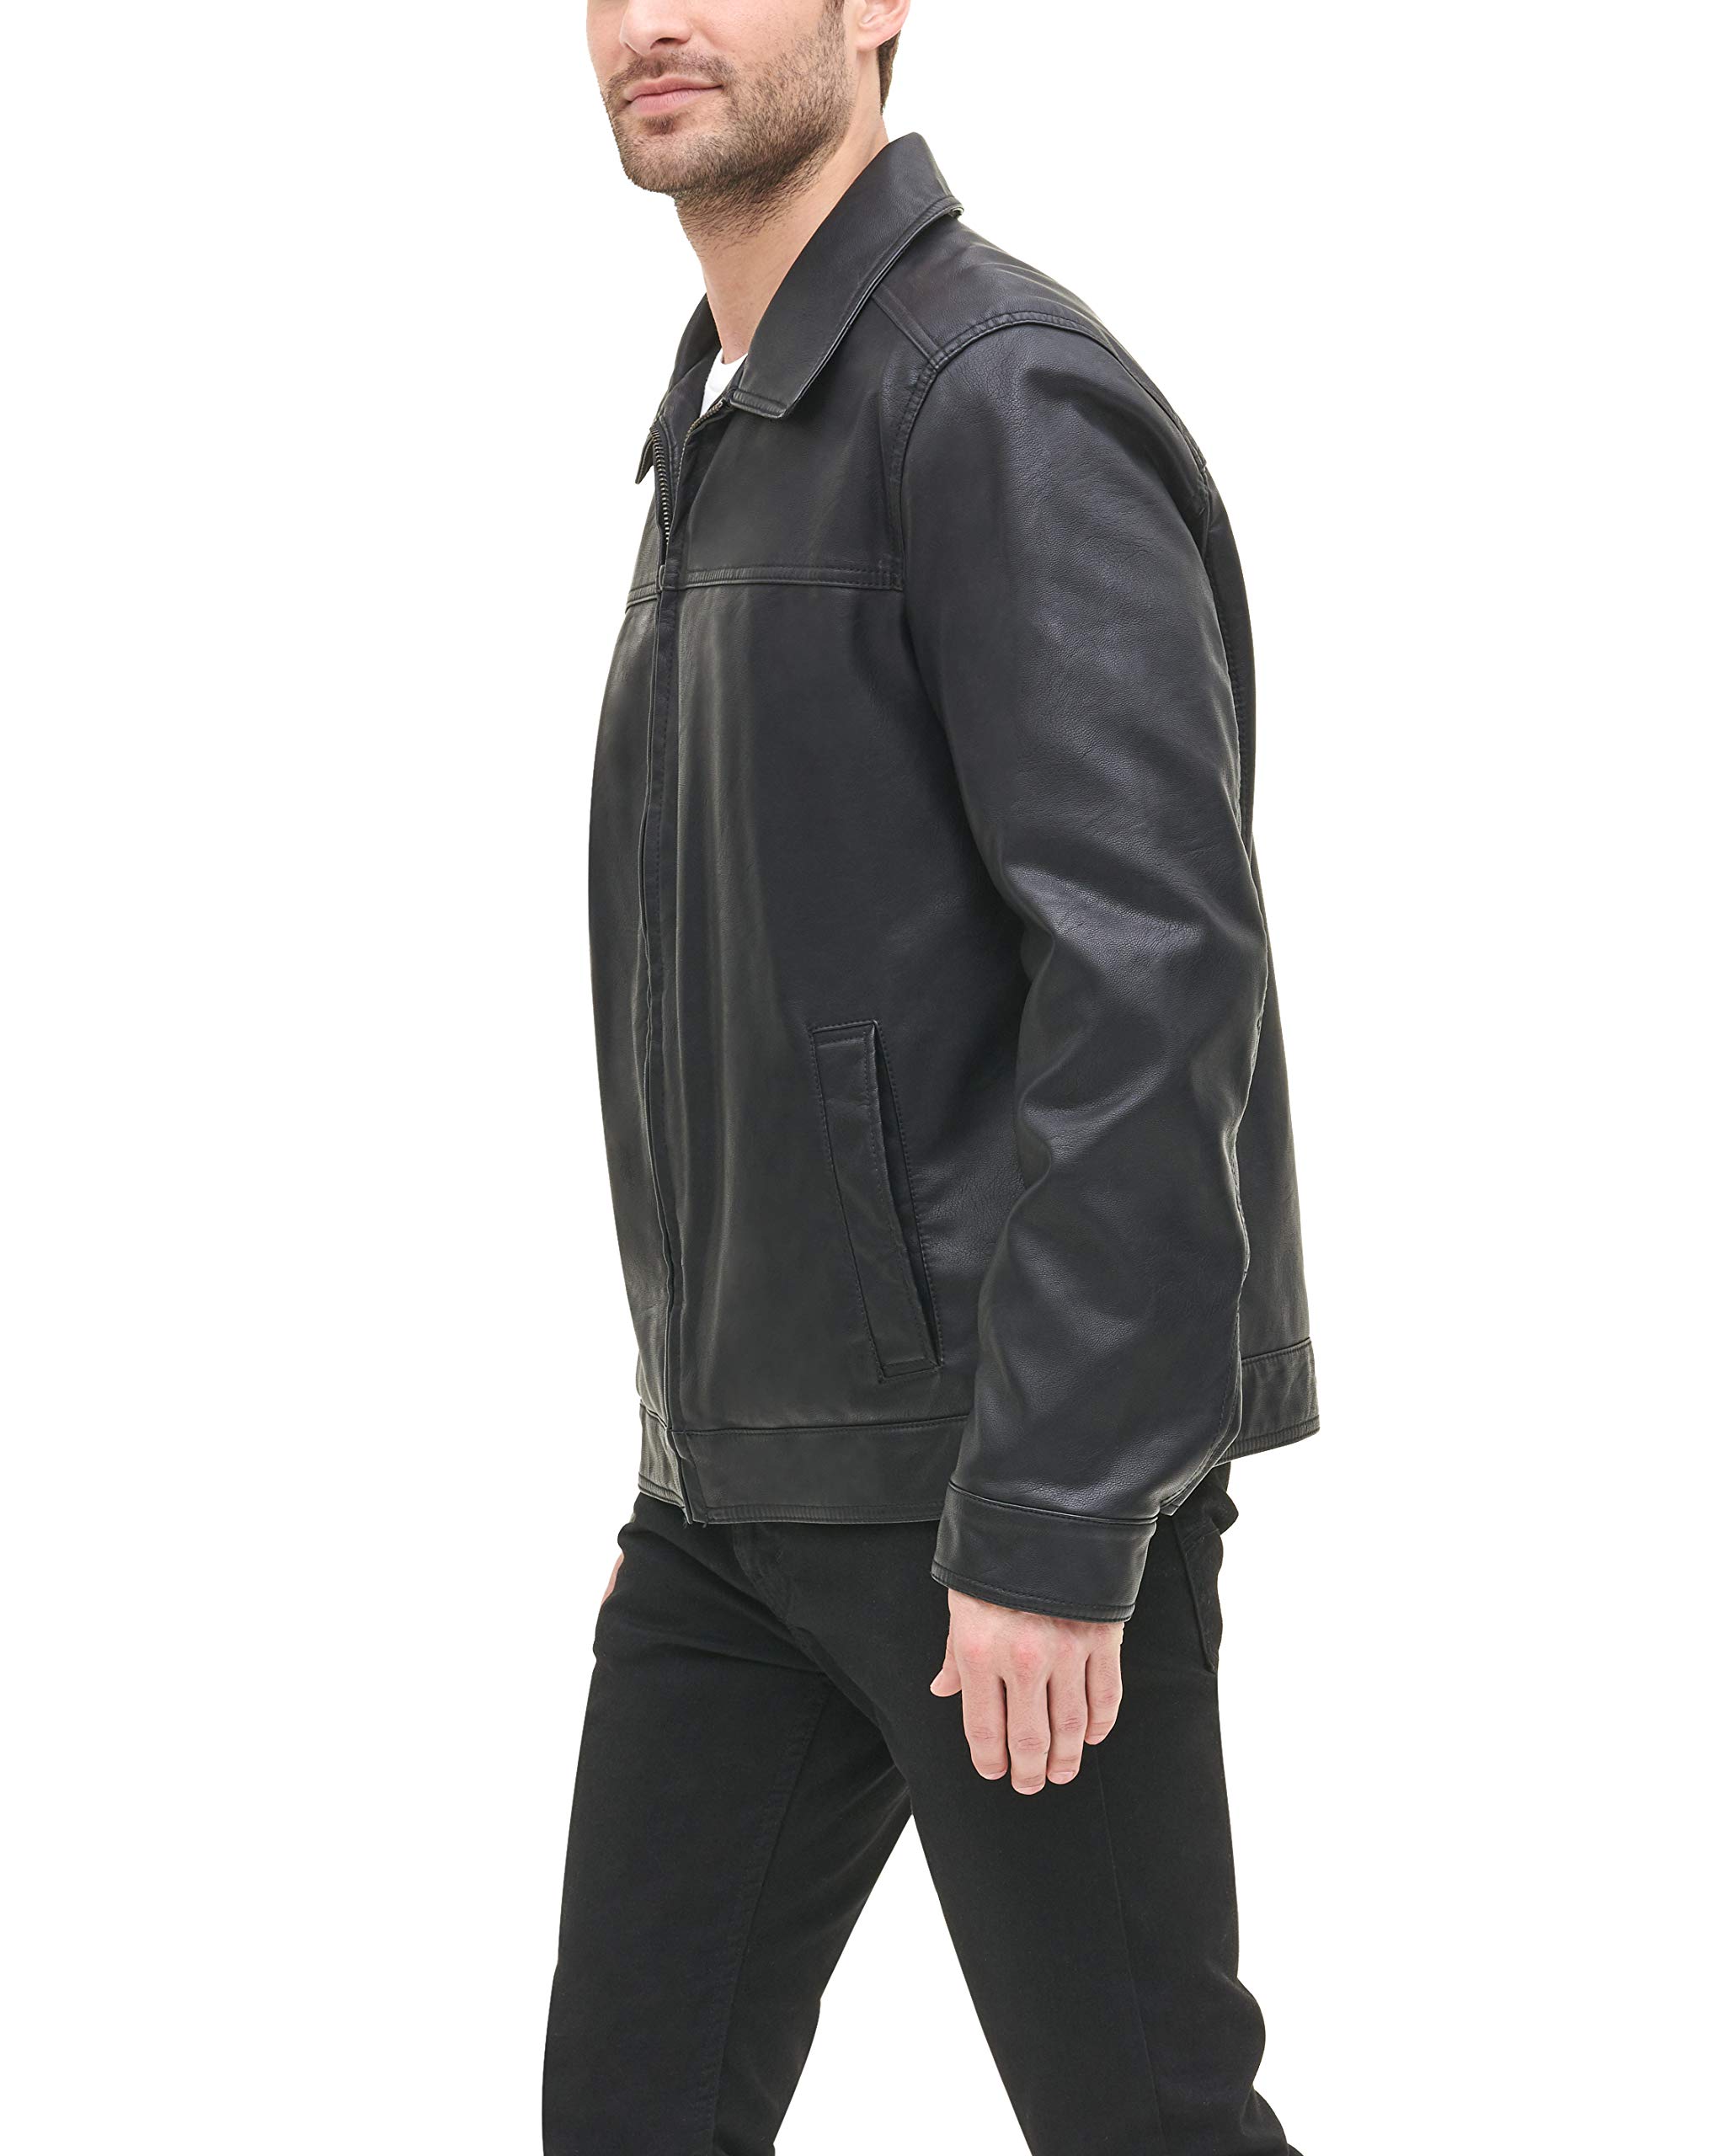 Tommy Hilfiger Men's Classic Faux Leather Jacket